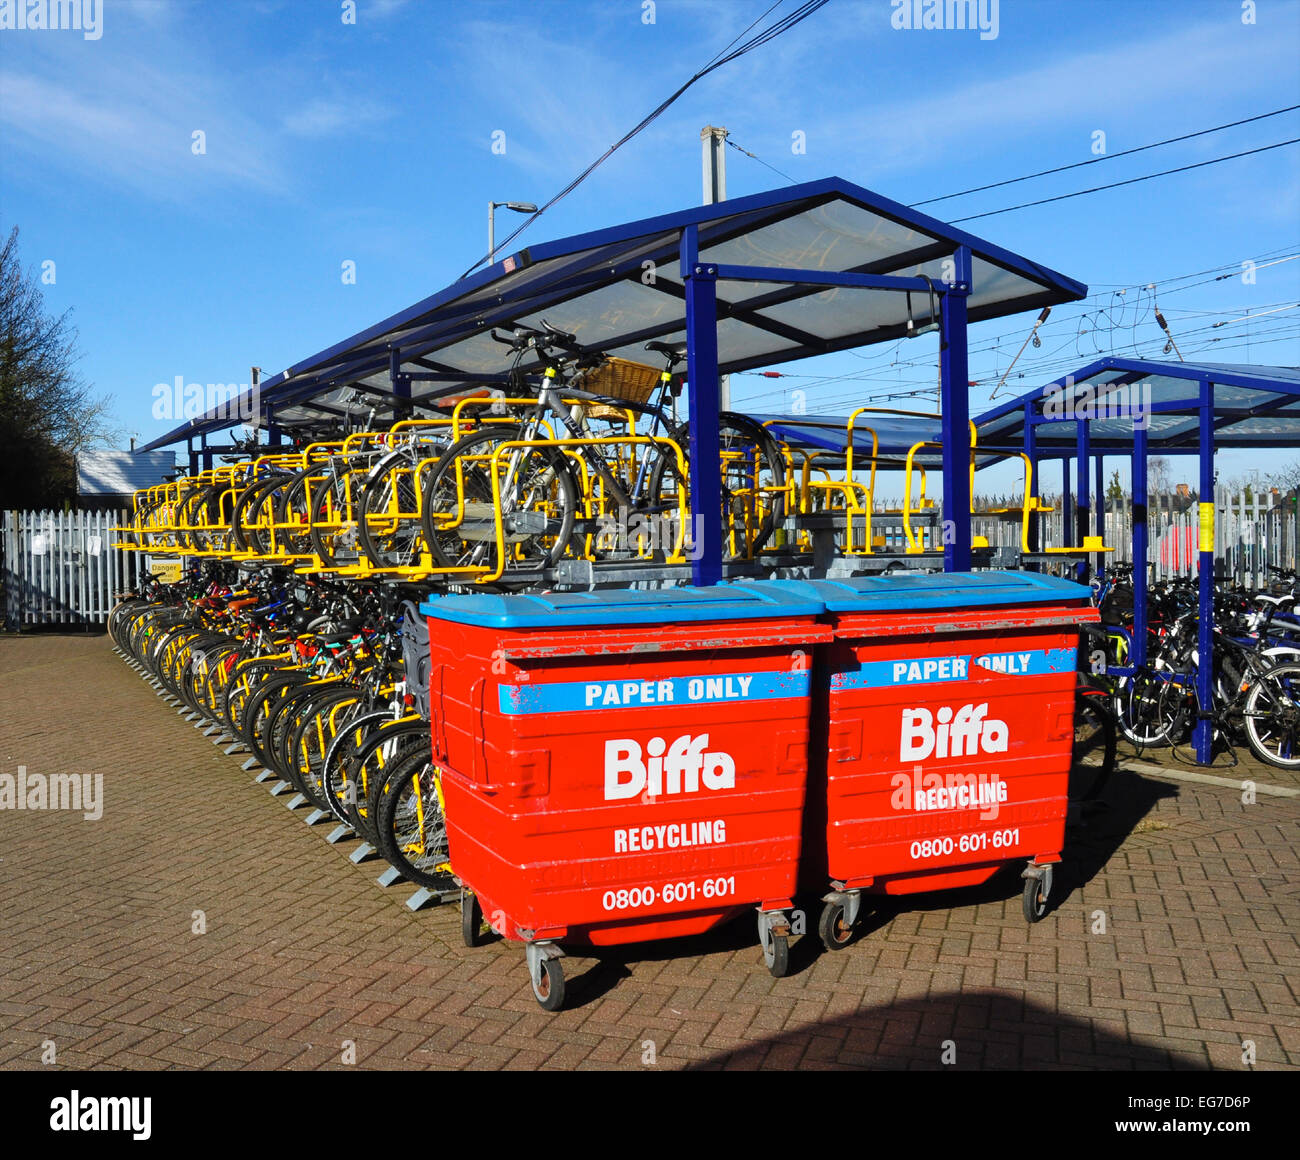 Cycle racks and recycling bins, Hitchin Railway Station, Hertfordshire, England, UK. Stock Photo